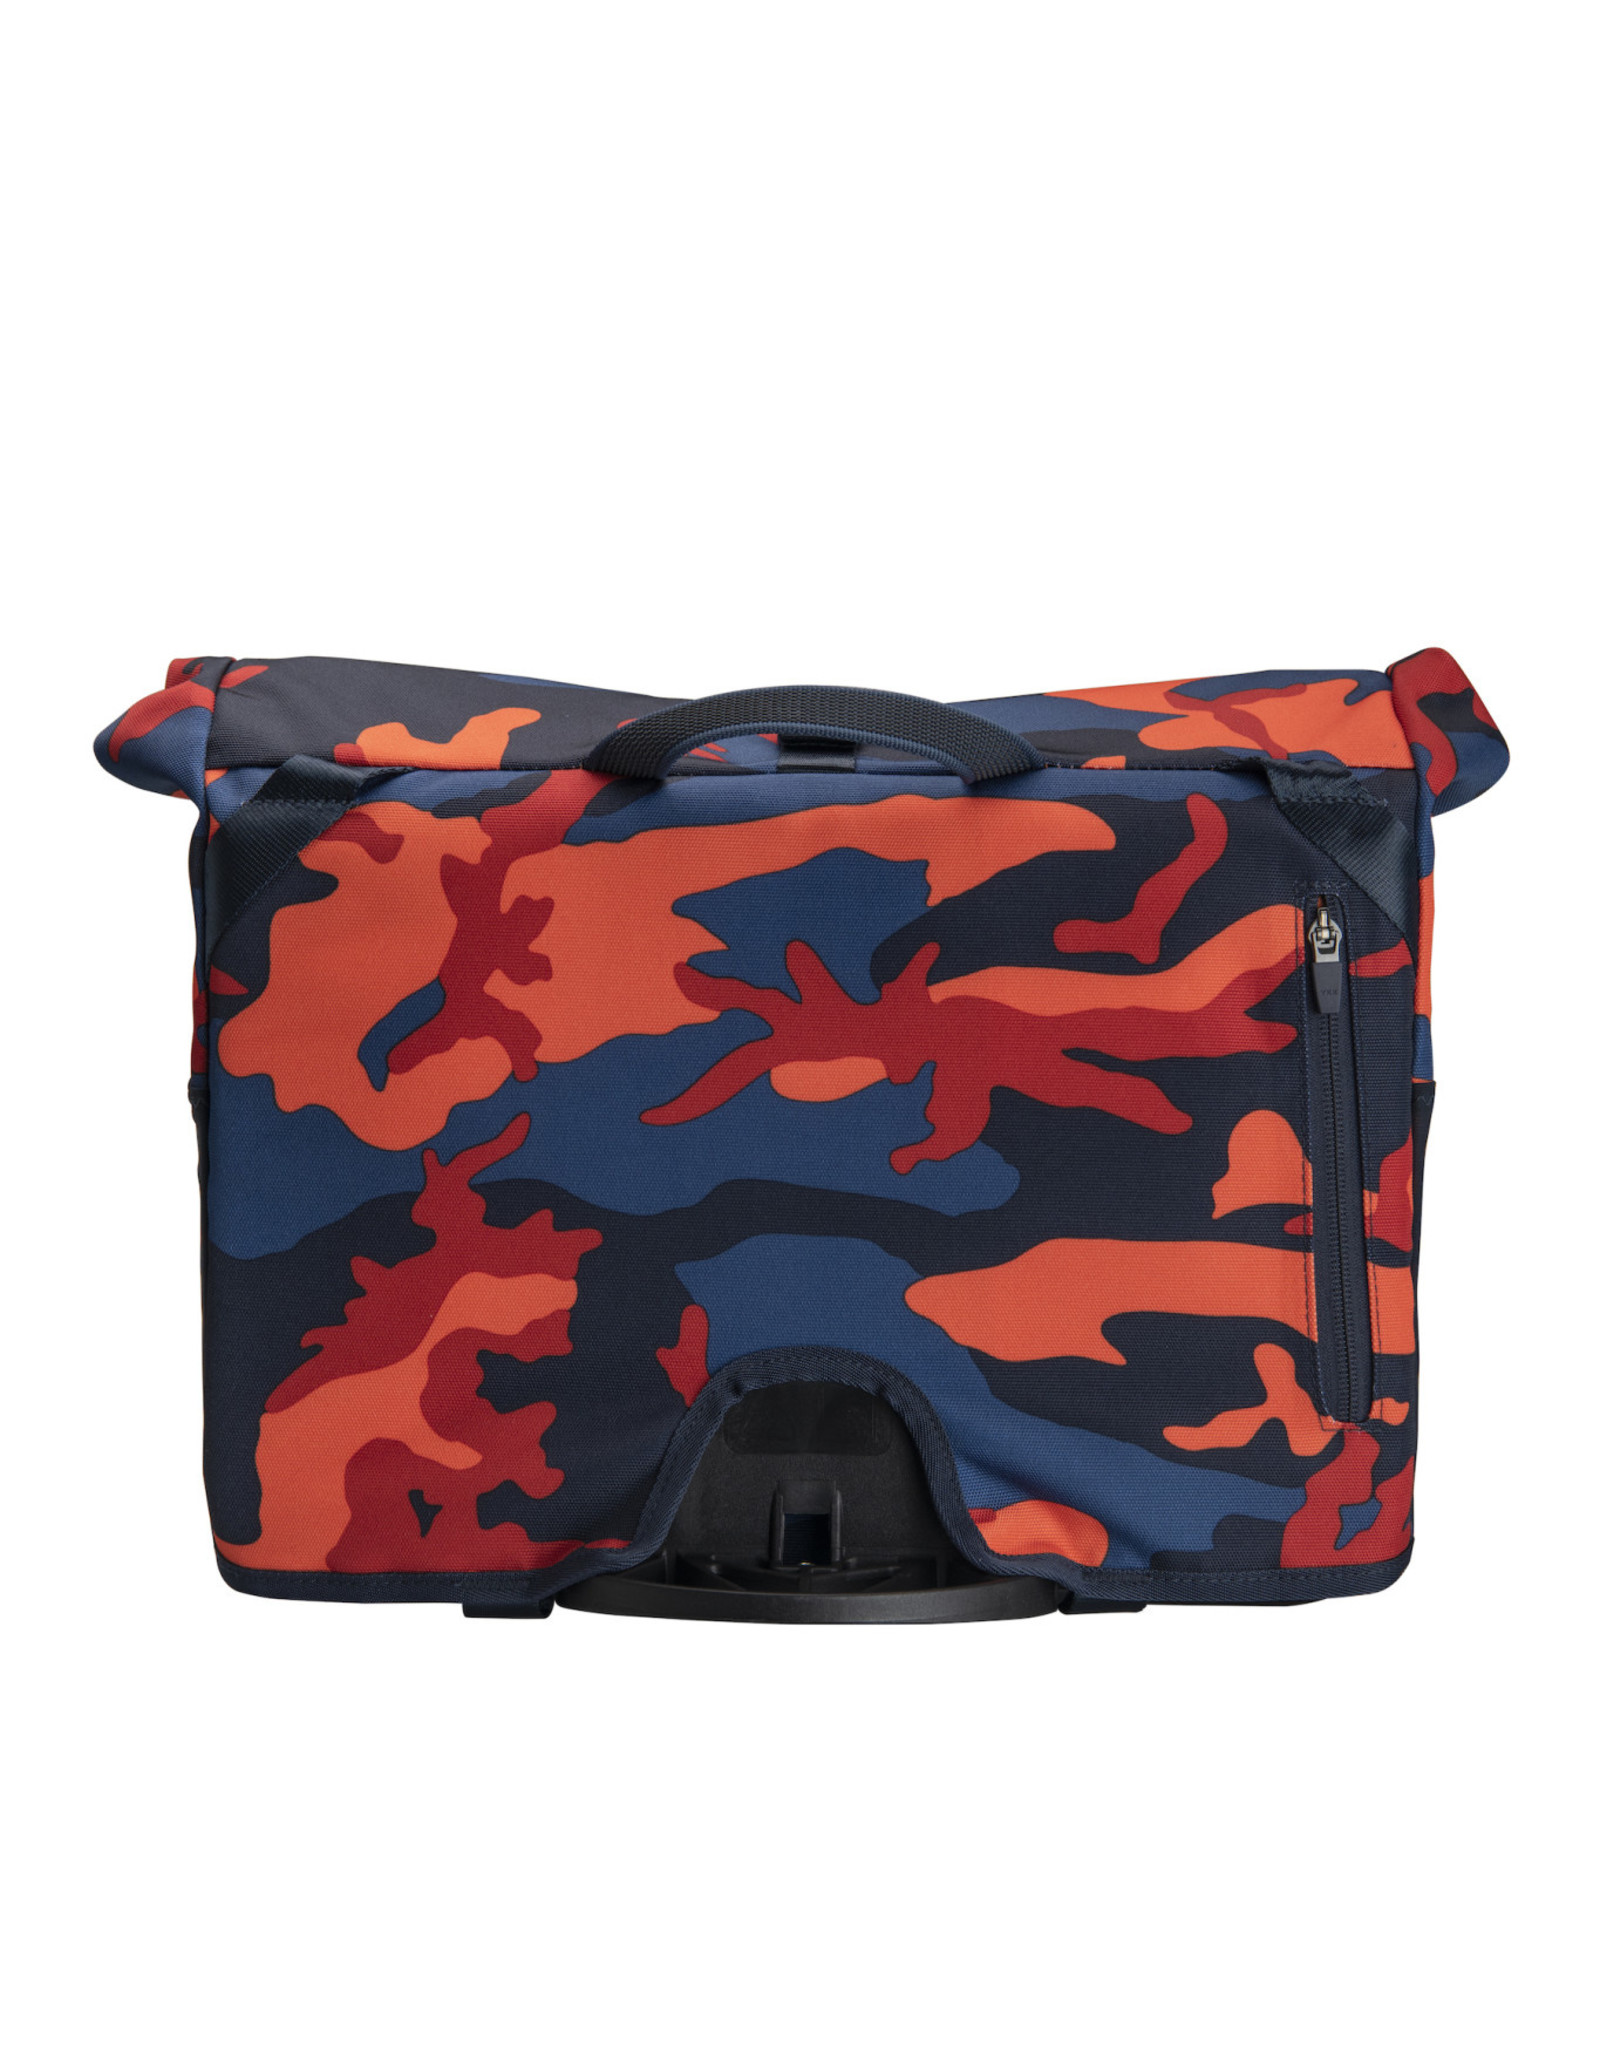 Brompton Brompton - Luggage - DISRUPT Borough Roll Top Bag, Medium